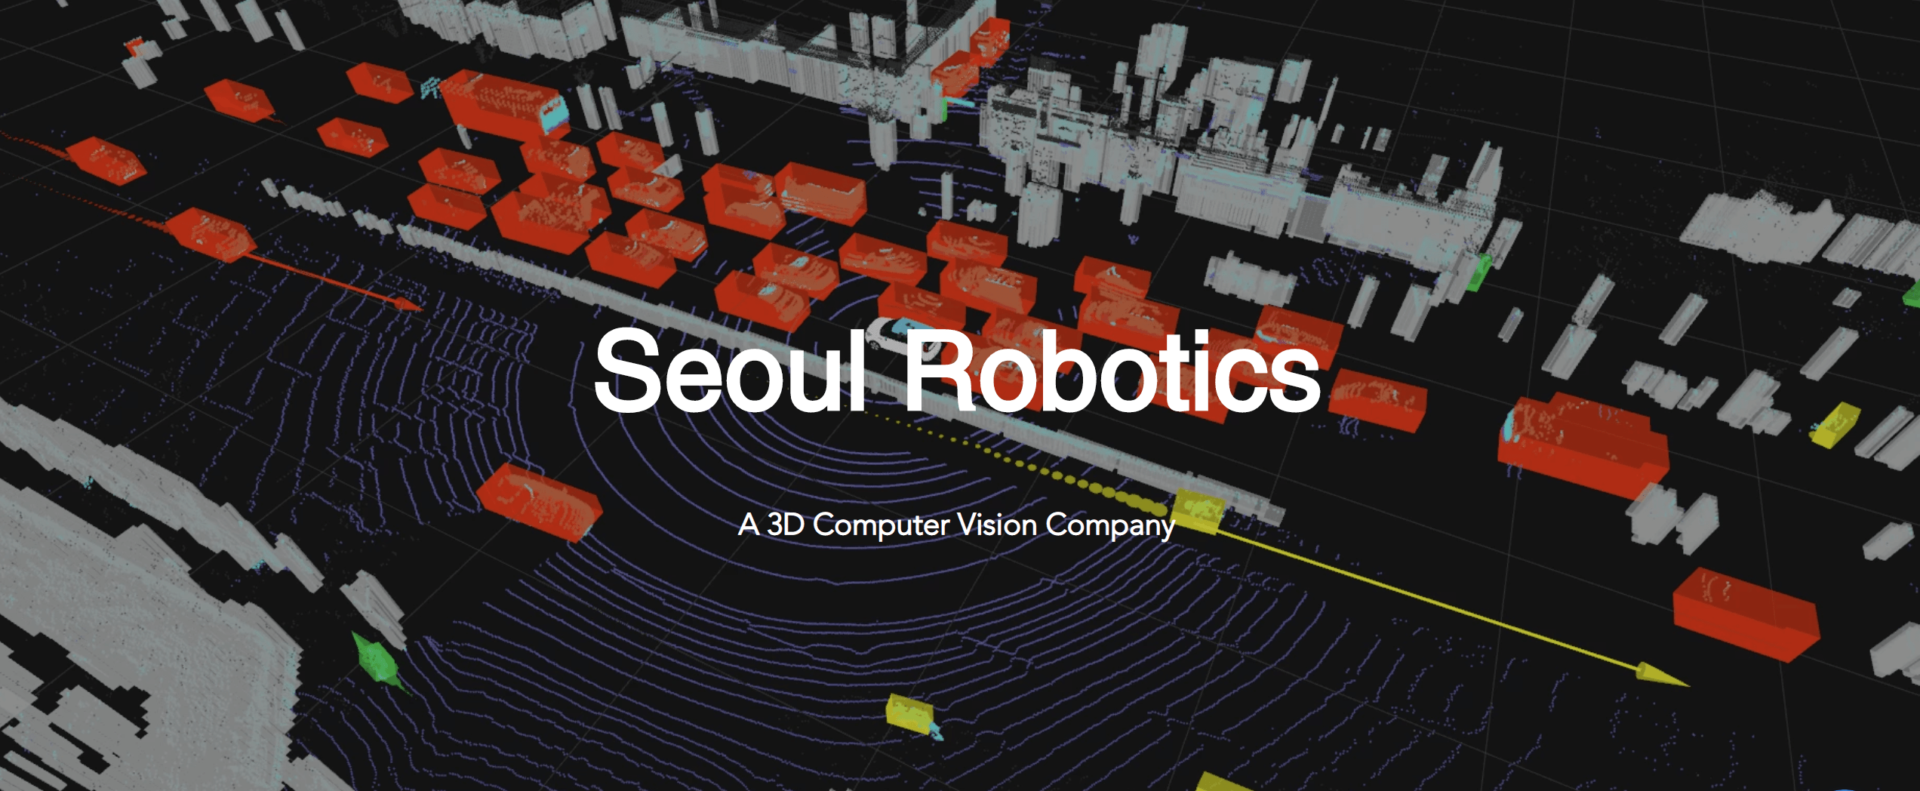 Seoul Robotics.